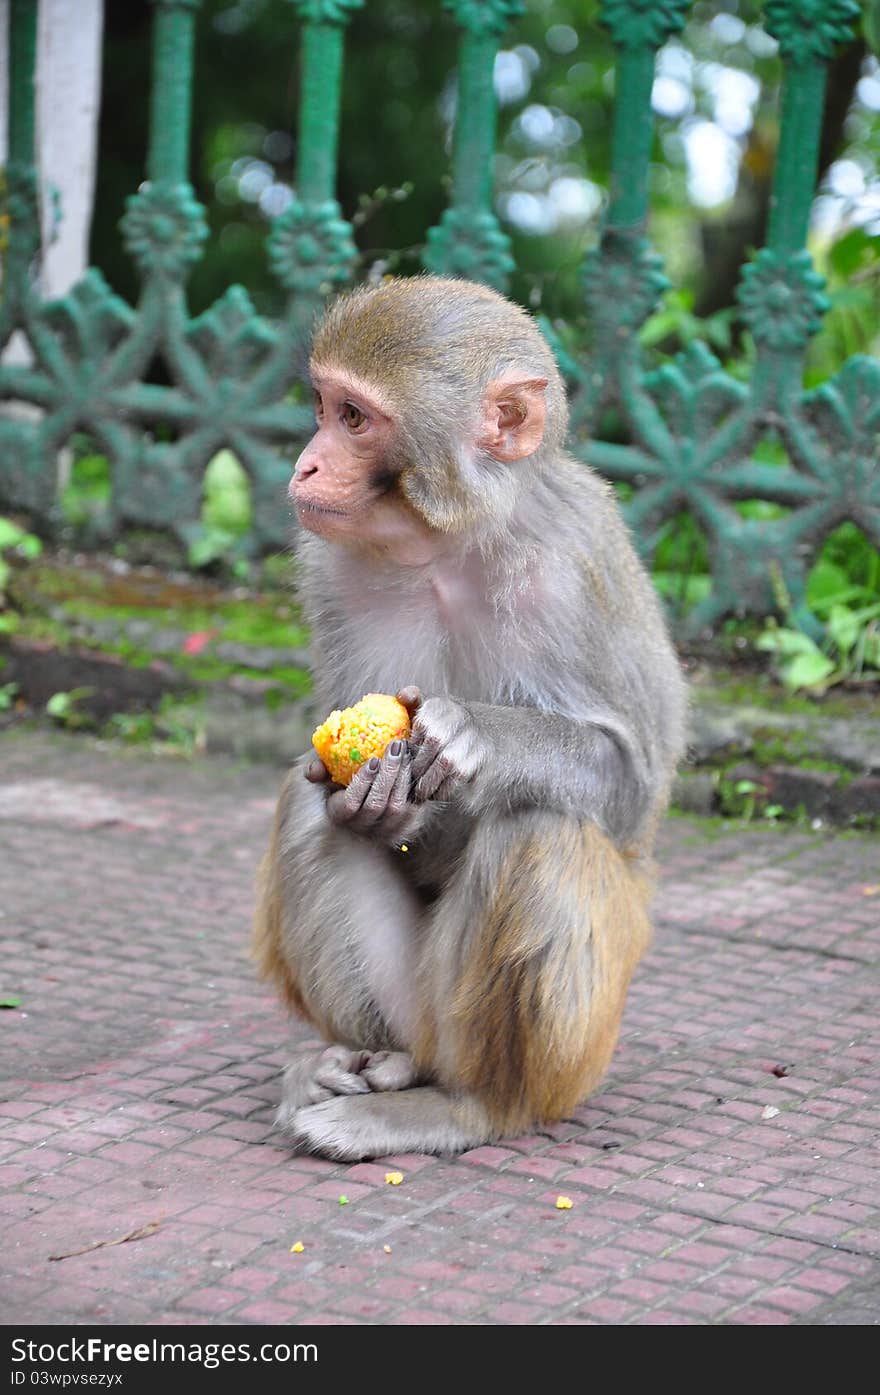 An Indian Monkey outside a temple having Indian Sweet 'Laddu'